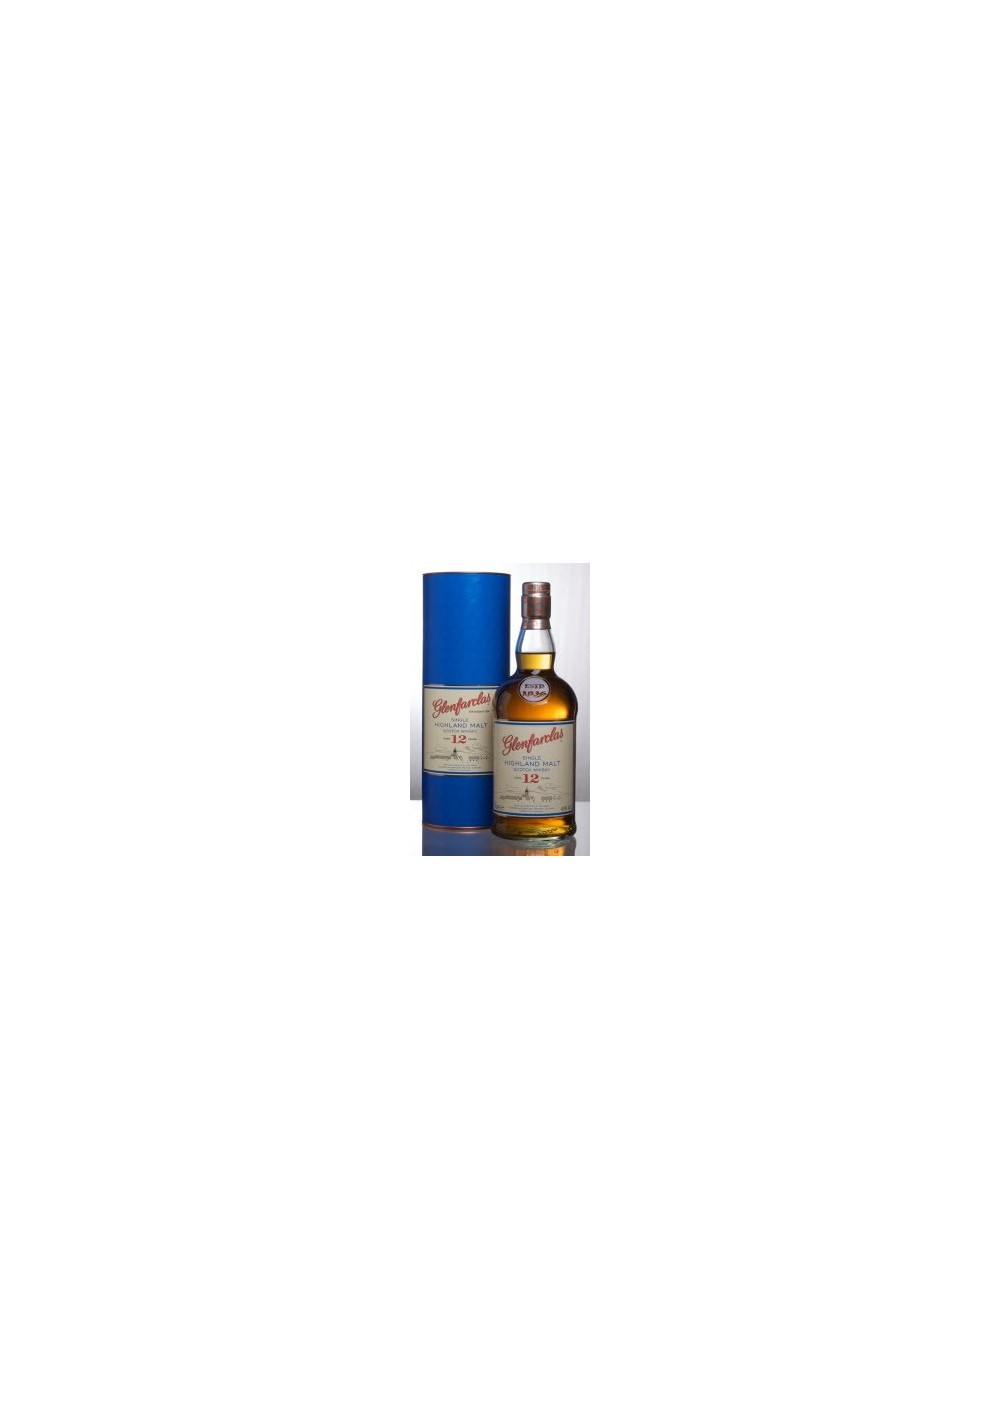 Glenfarclas - 12 Year Old - Single Malt Whisky